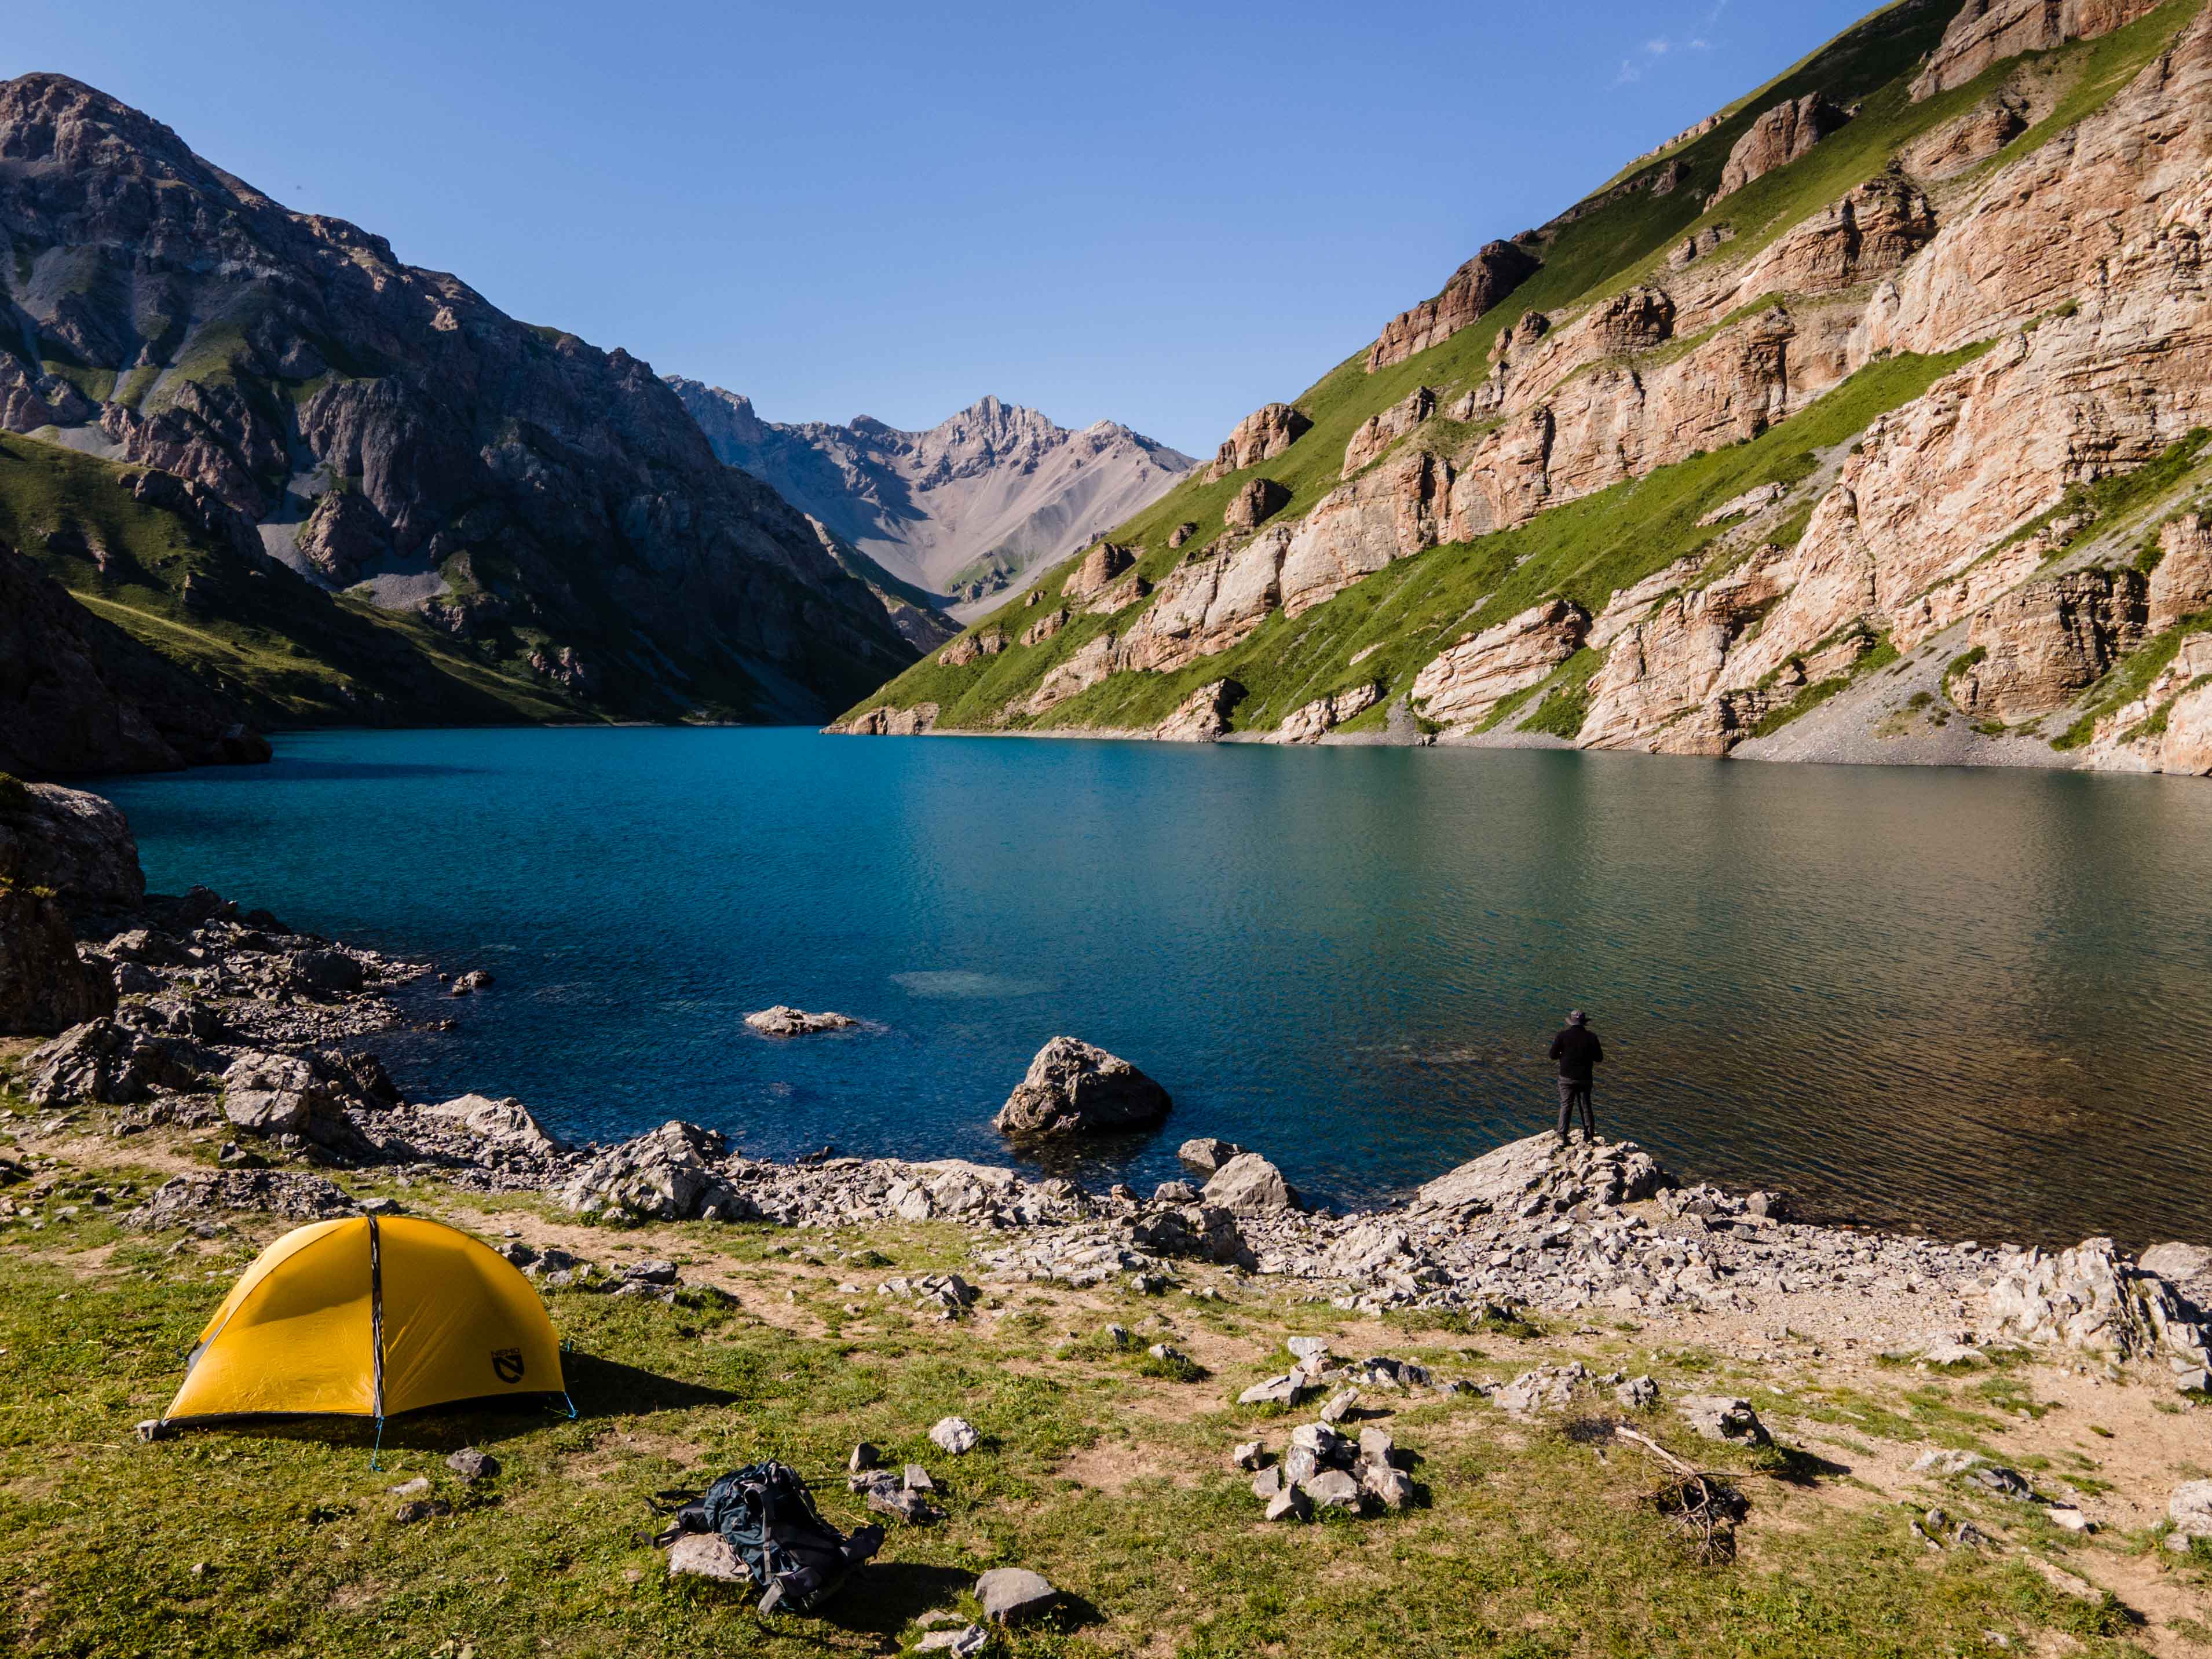 Camping beside Kol Tor Lake in the At Bashi region of Kyrgyzstan